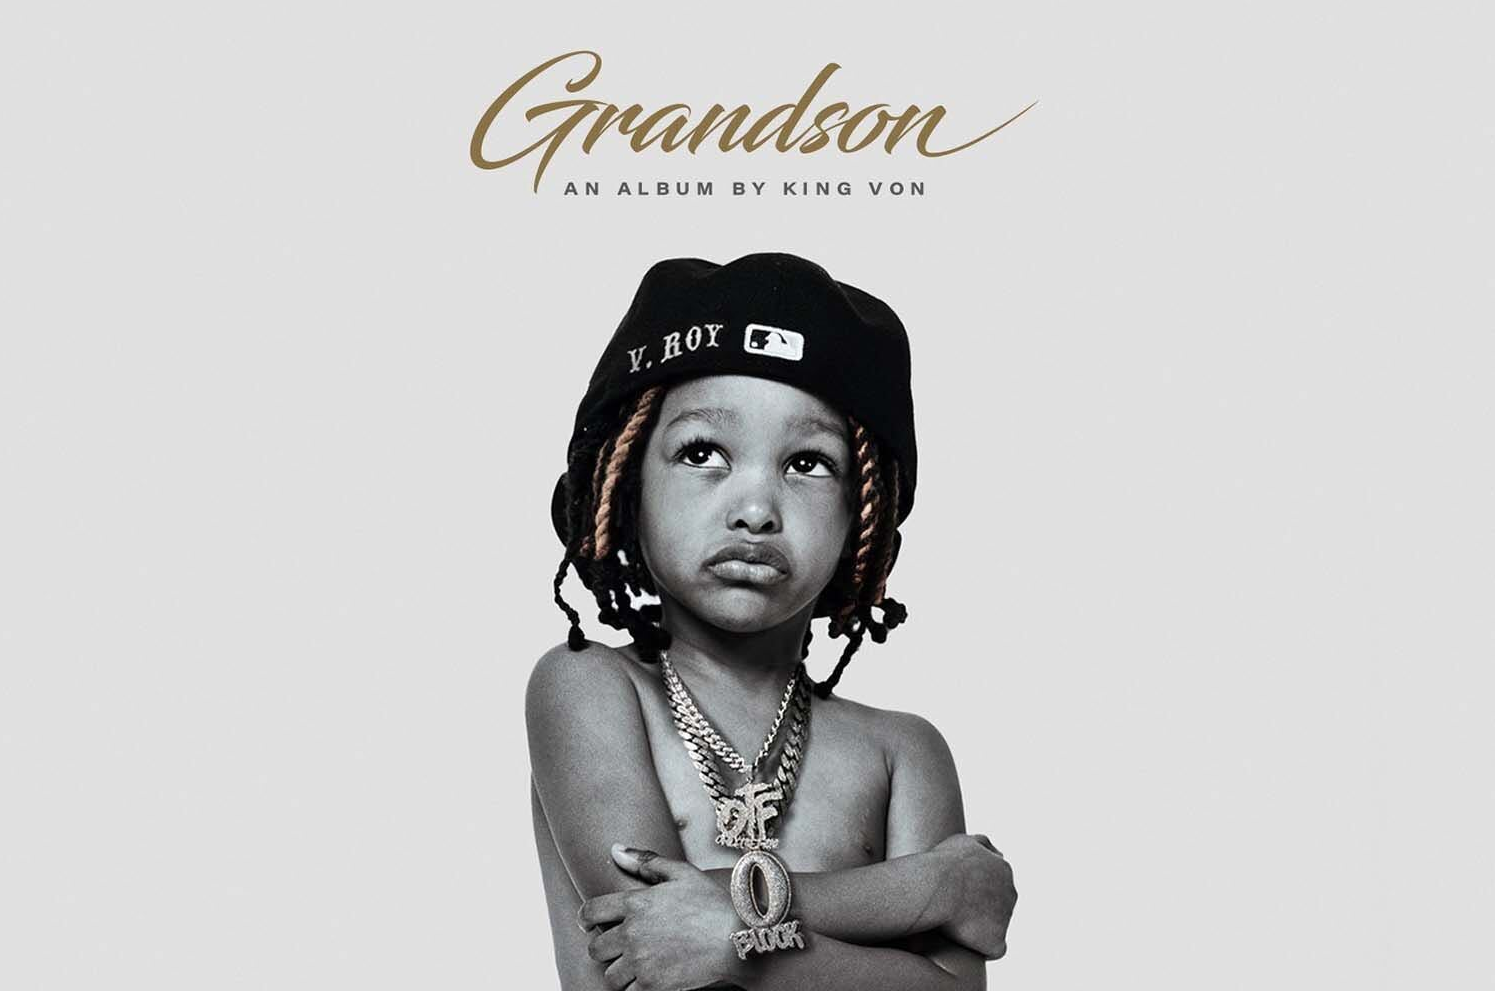 King Von's Estate Drops New Posthumous Album 'Grandson'